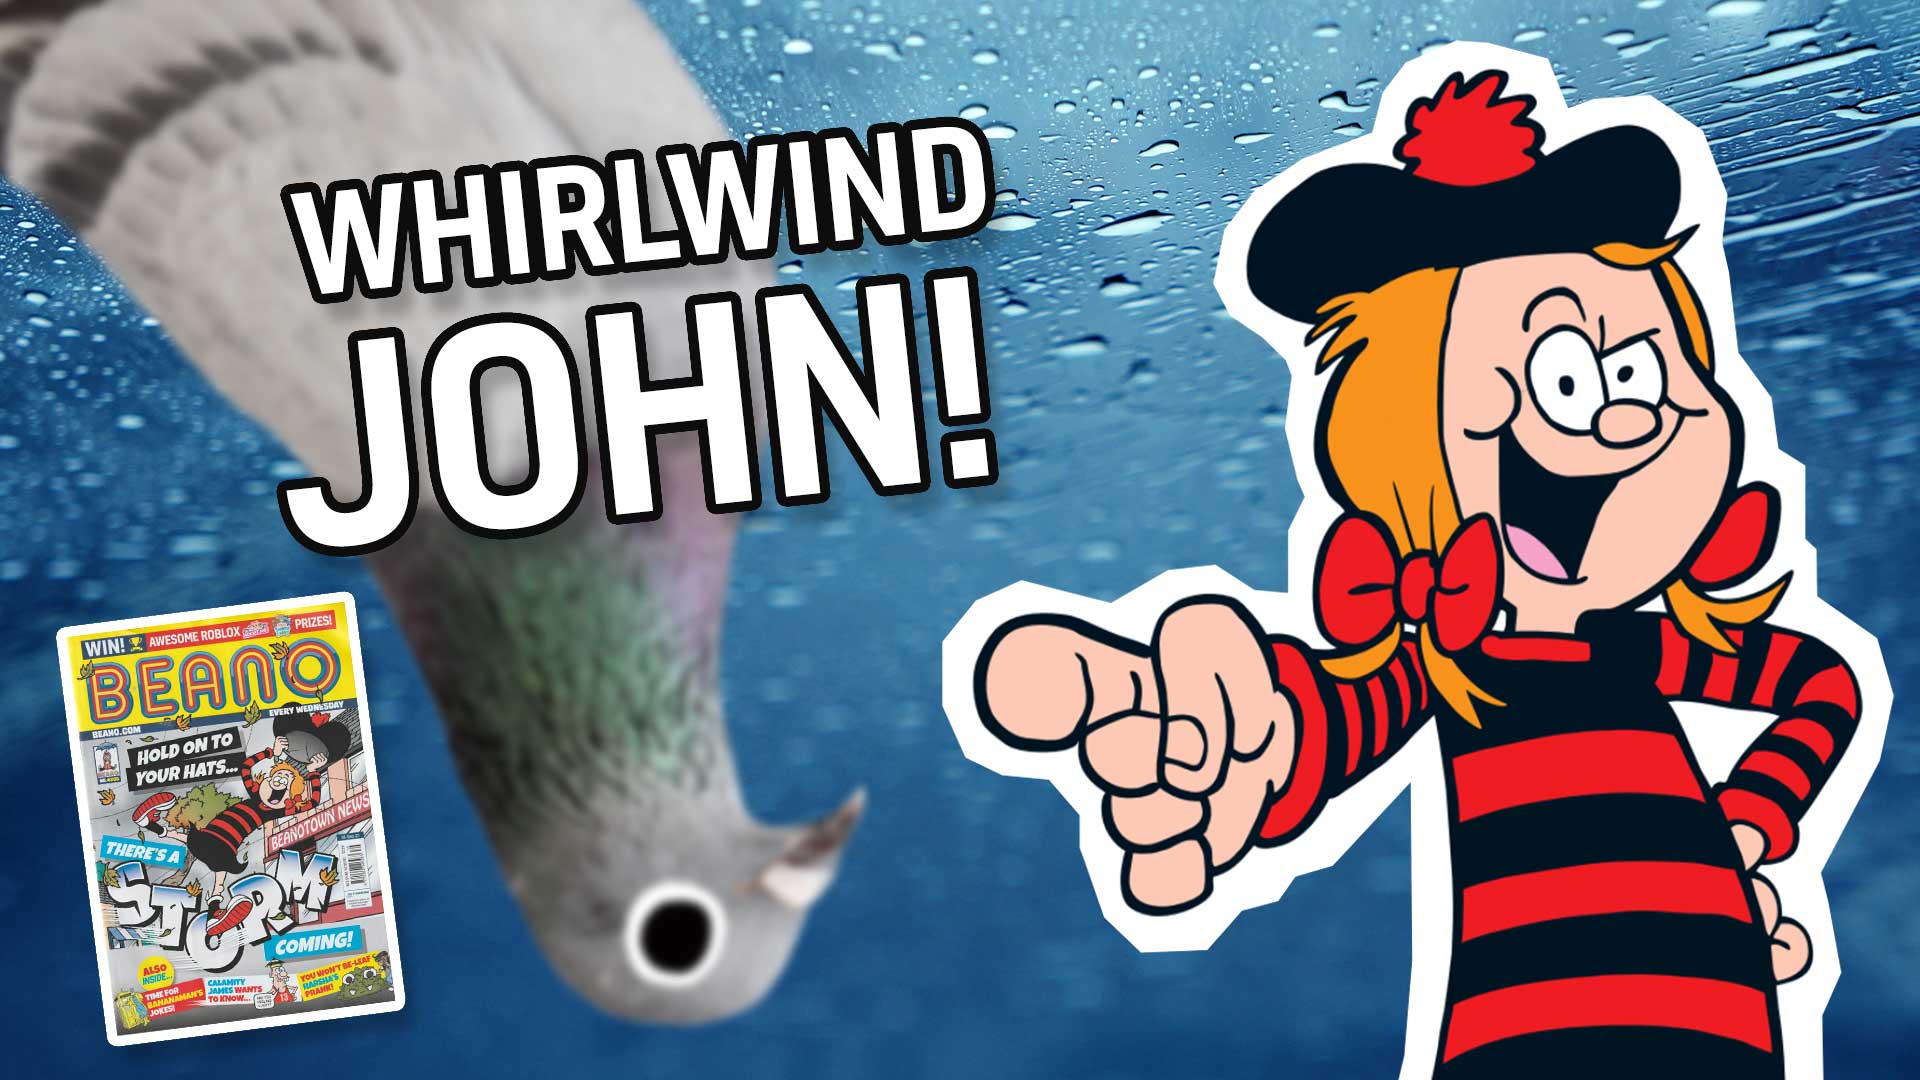 Result: Whirlwind John